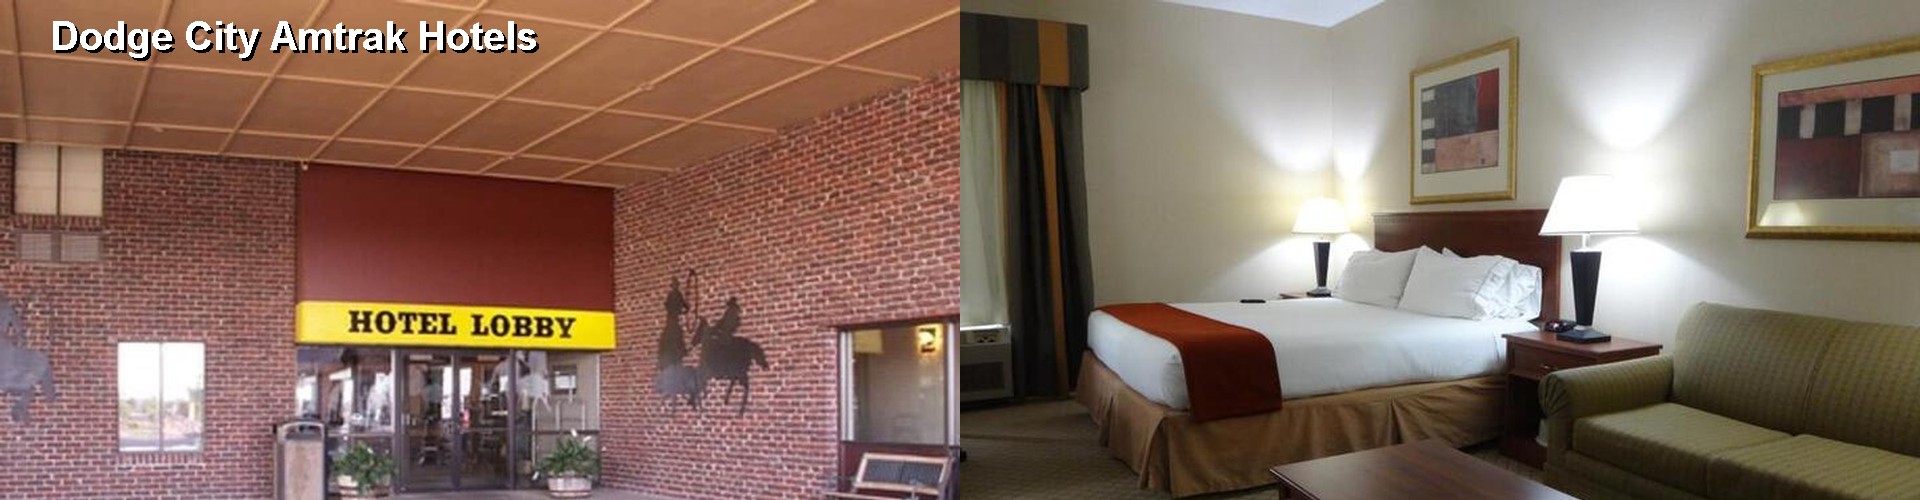 3 Best Hotels near Dodge City Amtrak